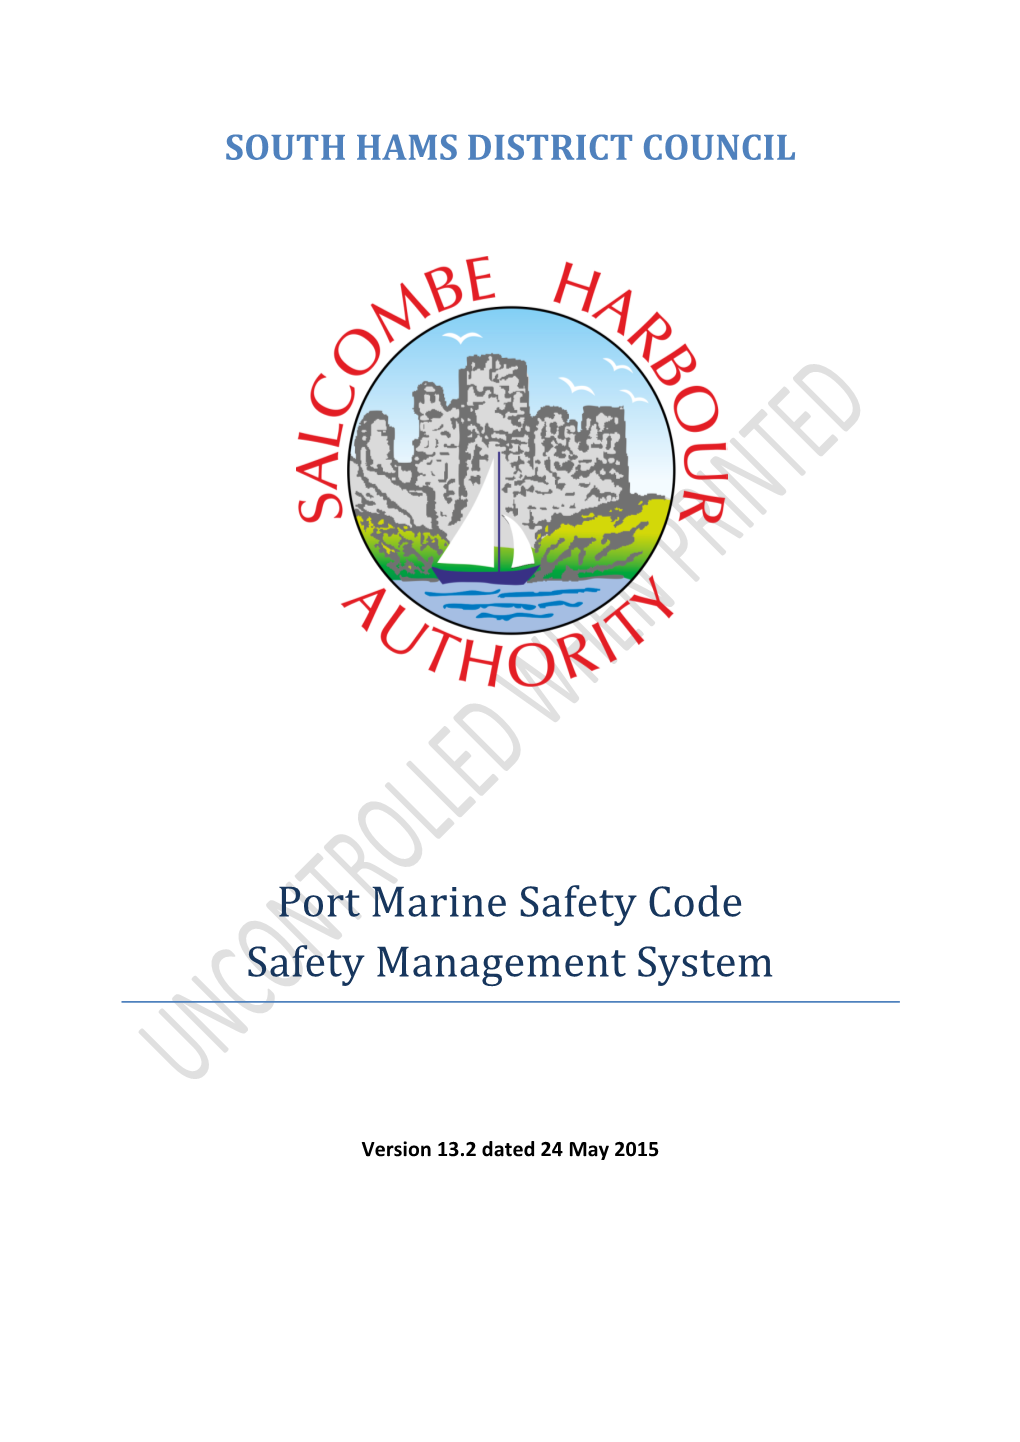 Port Marine Safety Code Safety Management System